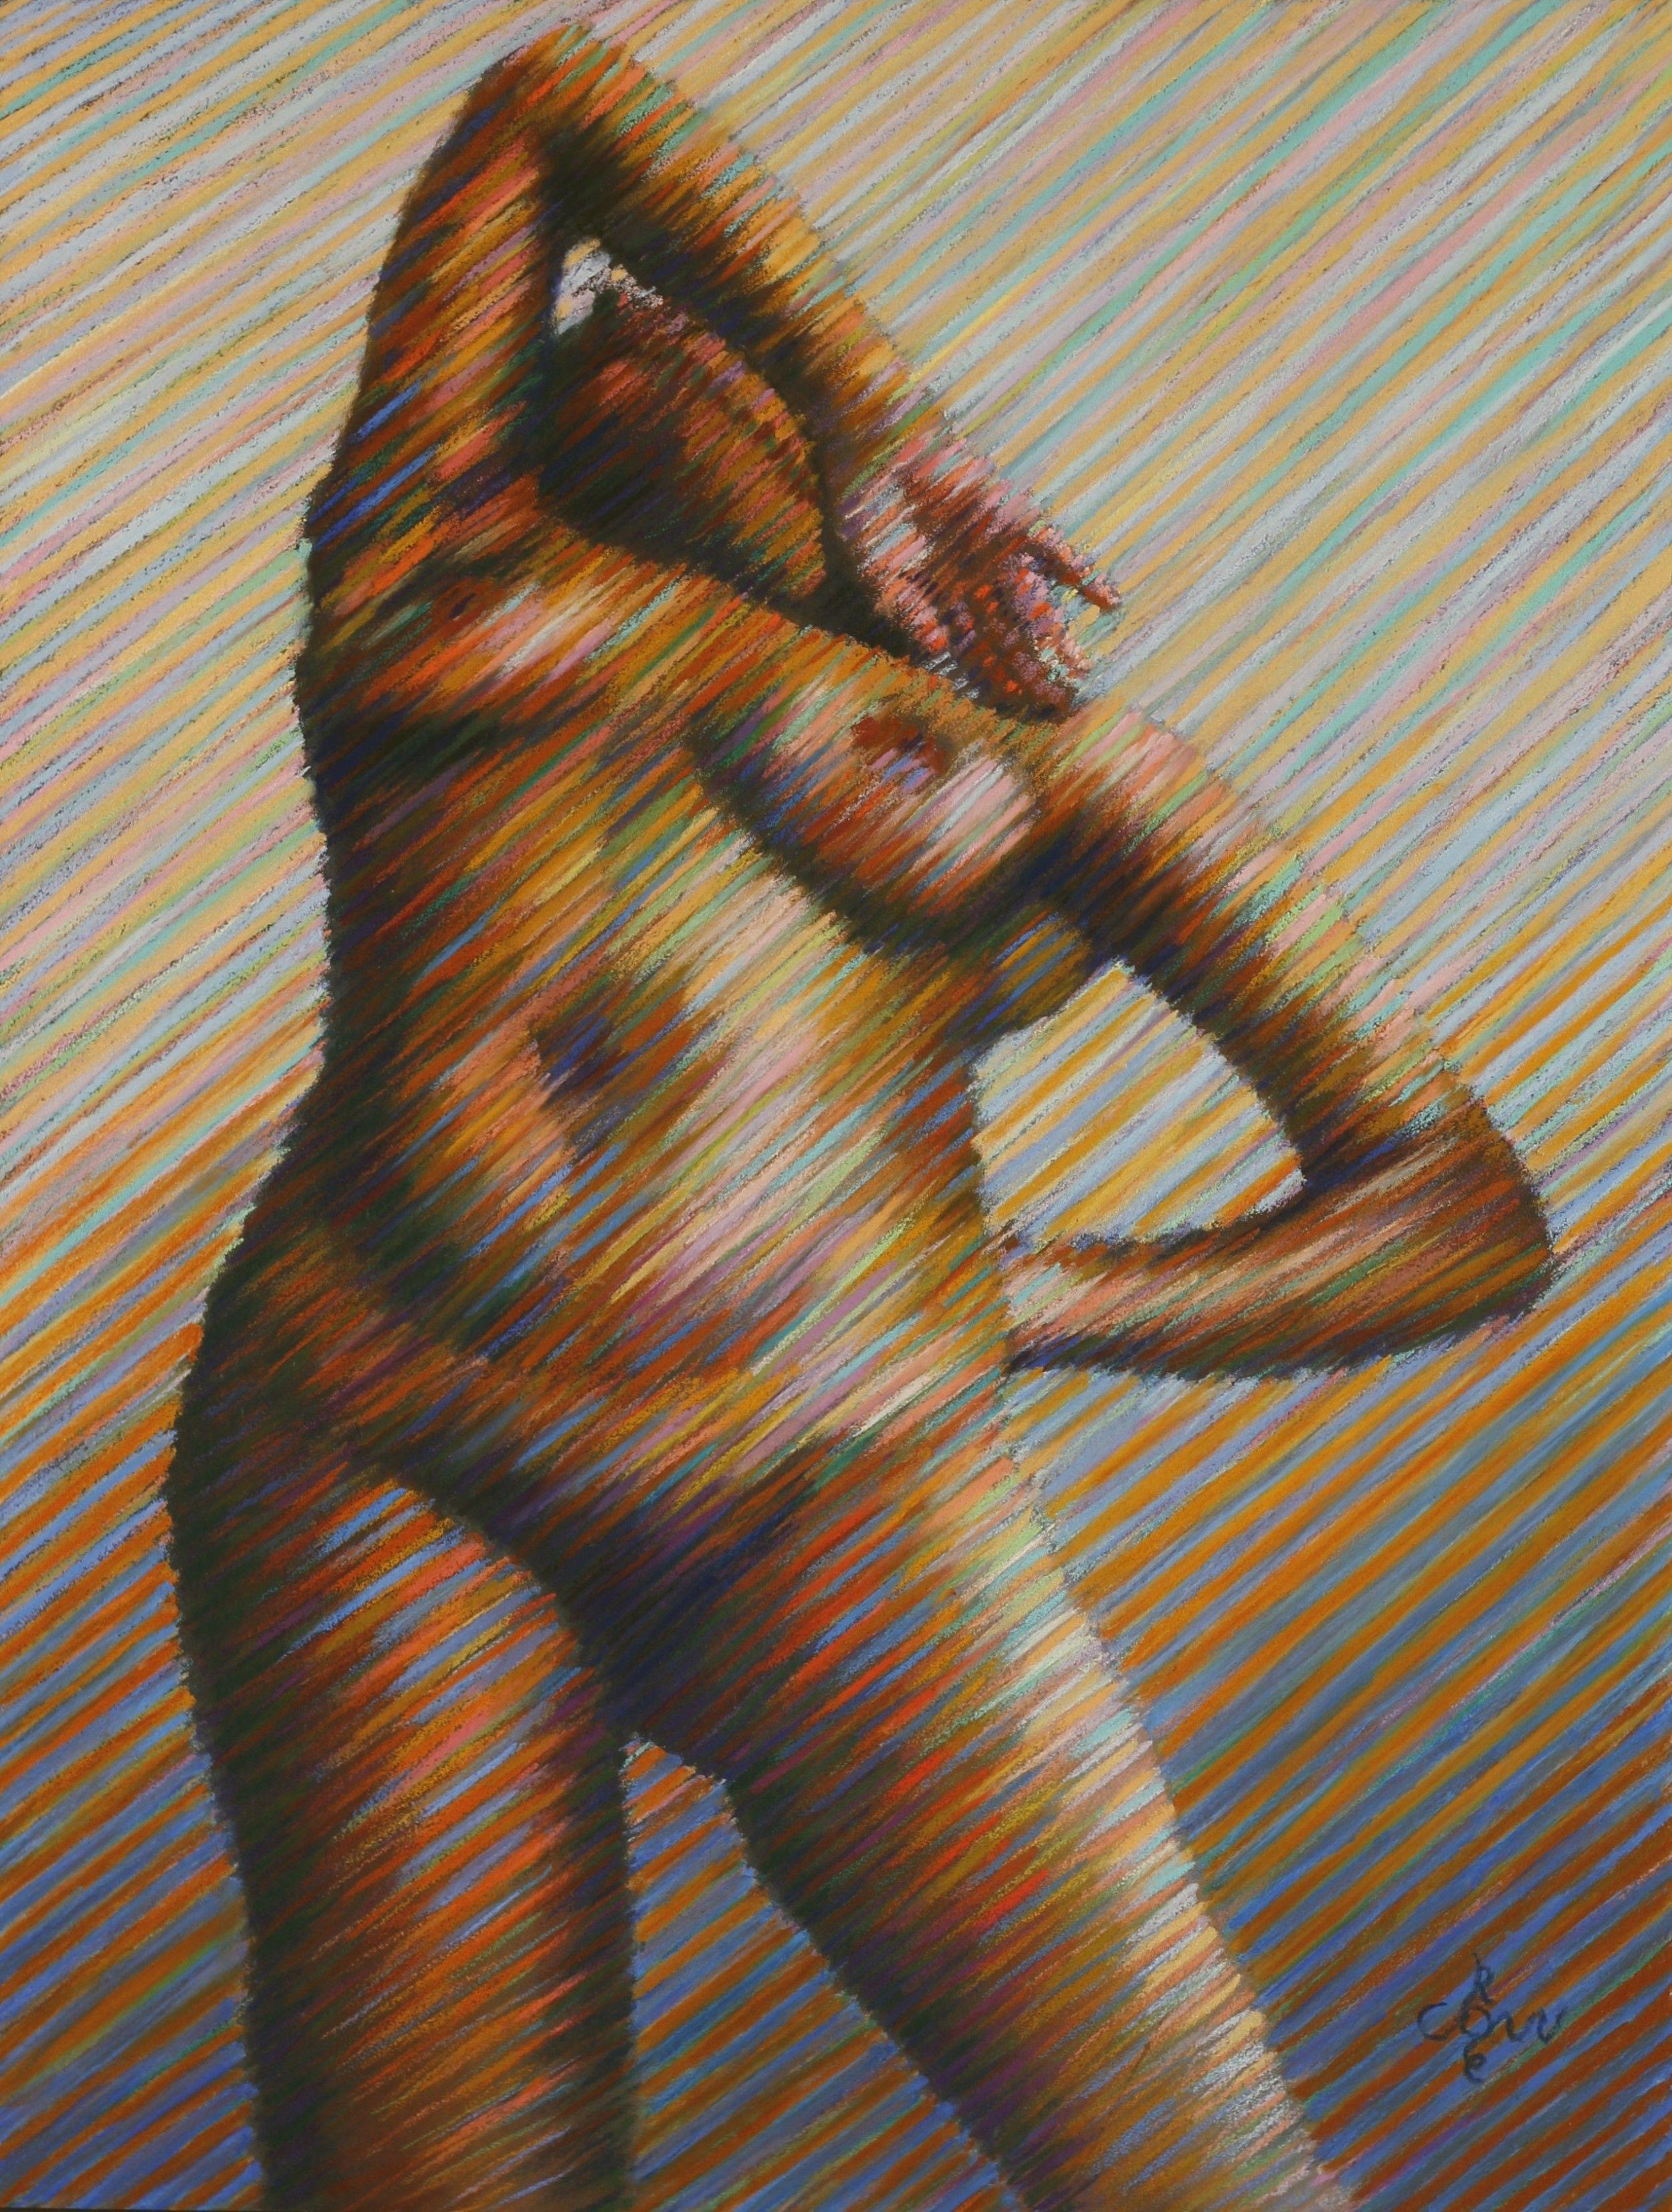 Nude â€“ 02-02-19, Drawing, Pastels on Pastel Sandpaper - Art by Corne Akkers